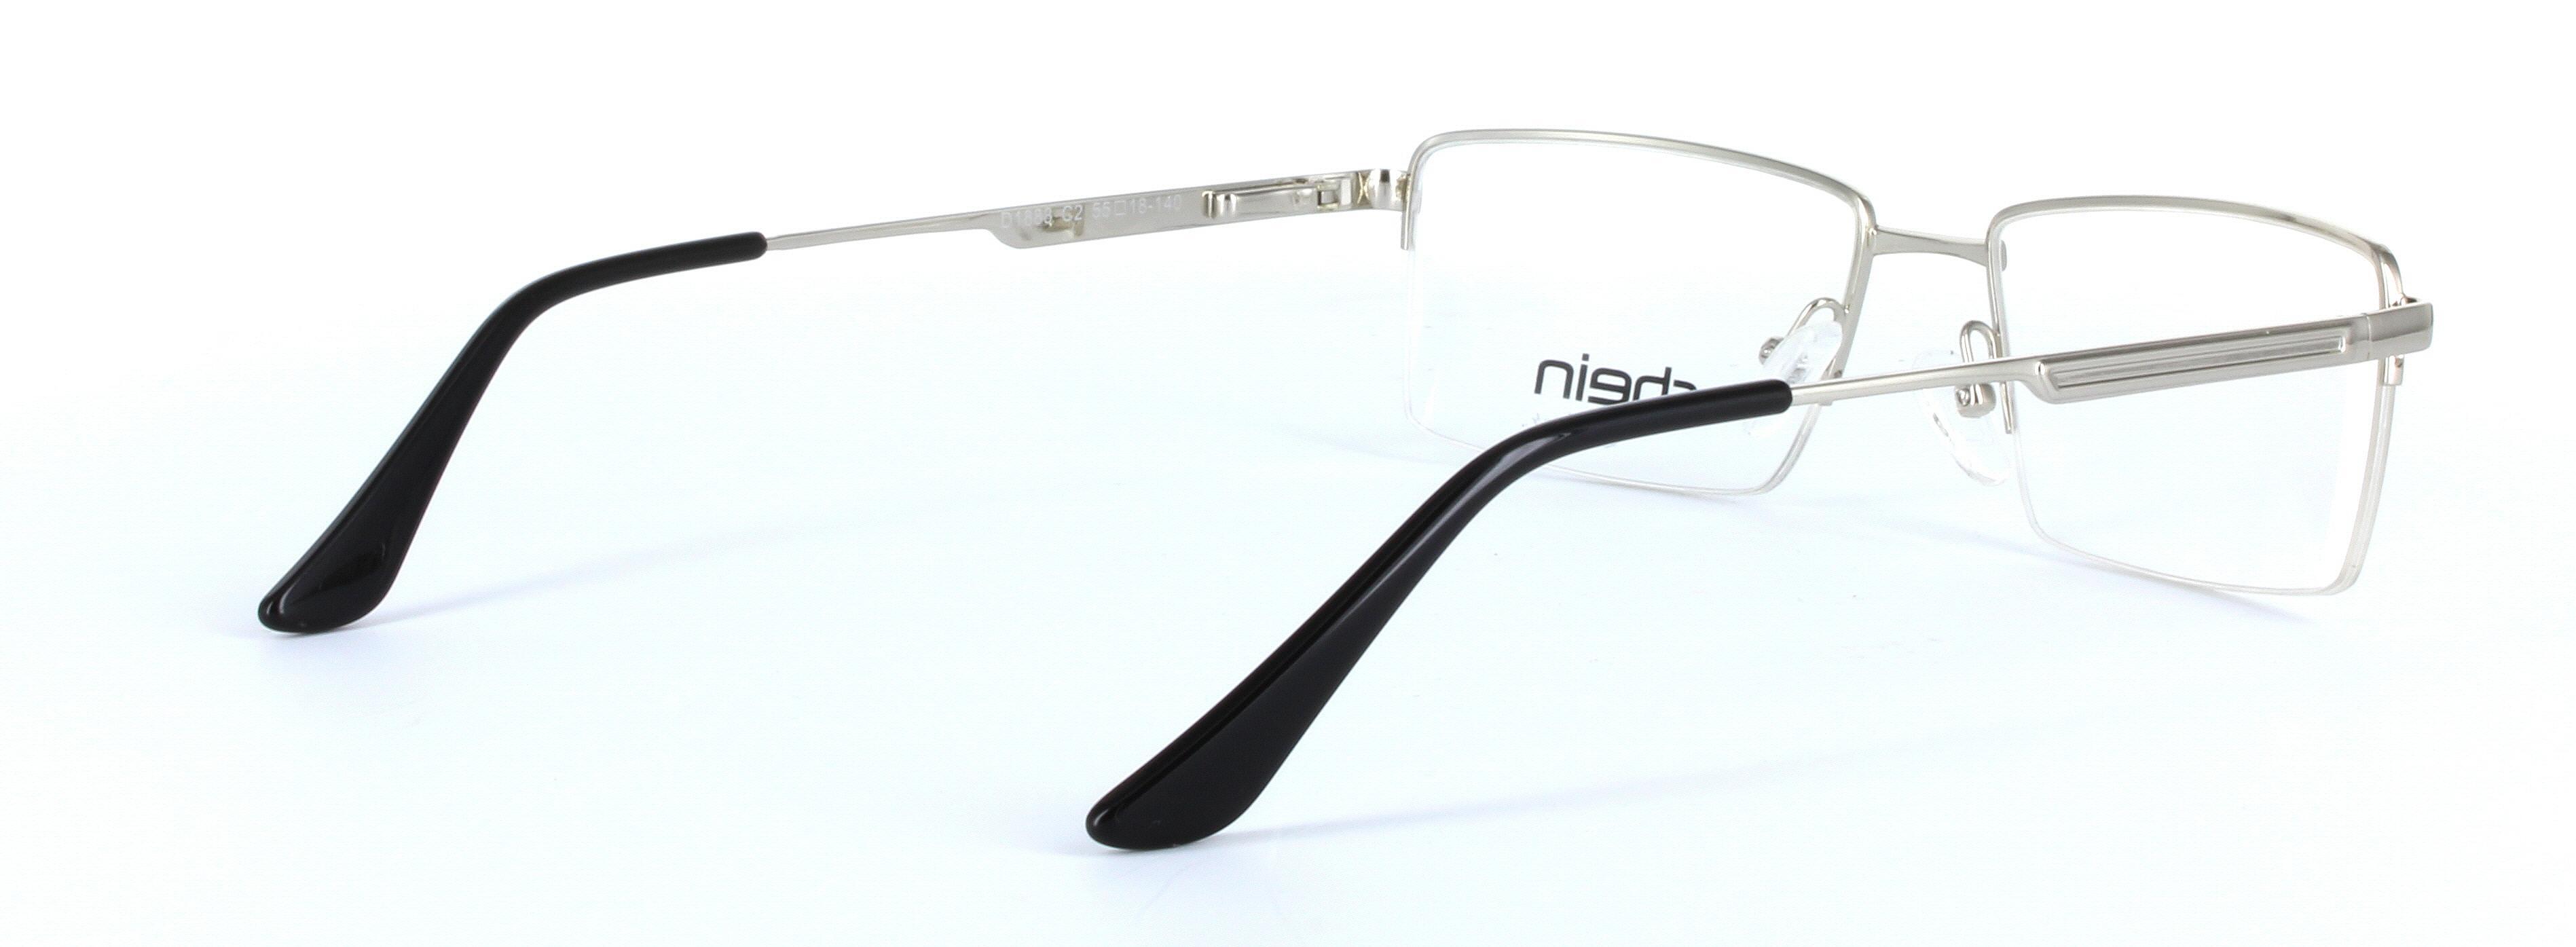 Highfield Silver Semi Rimless Rectangular Metal Glasses - Image View 4